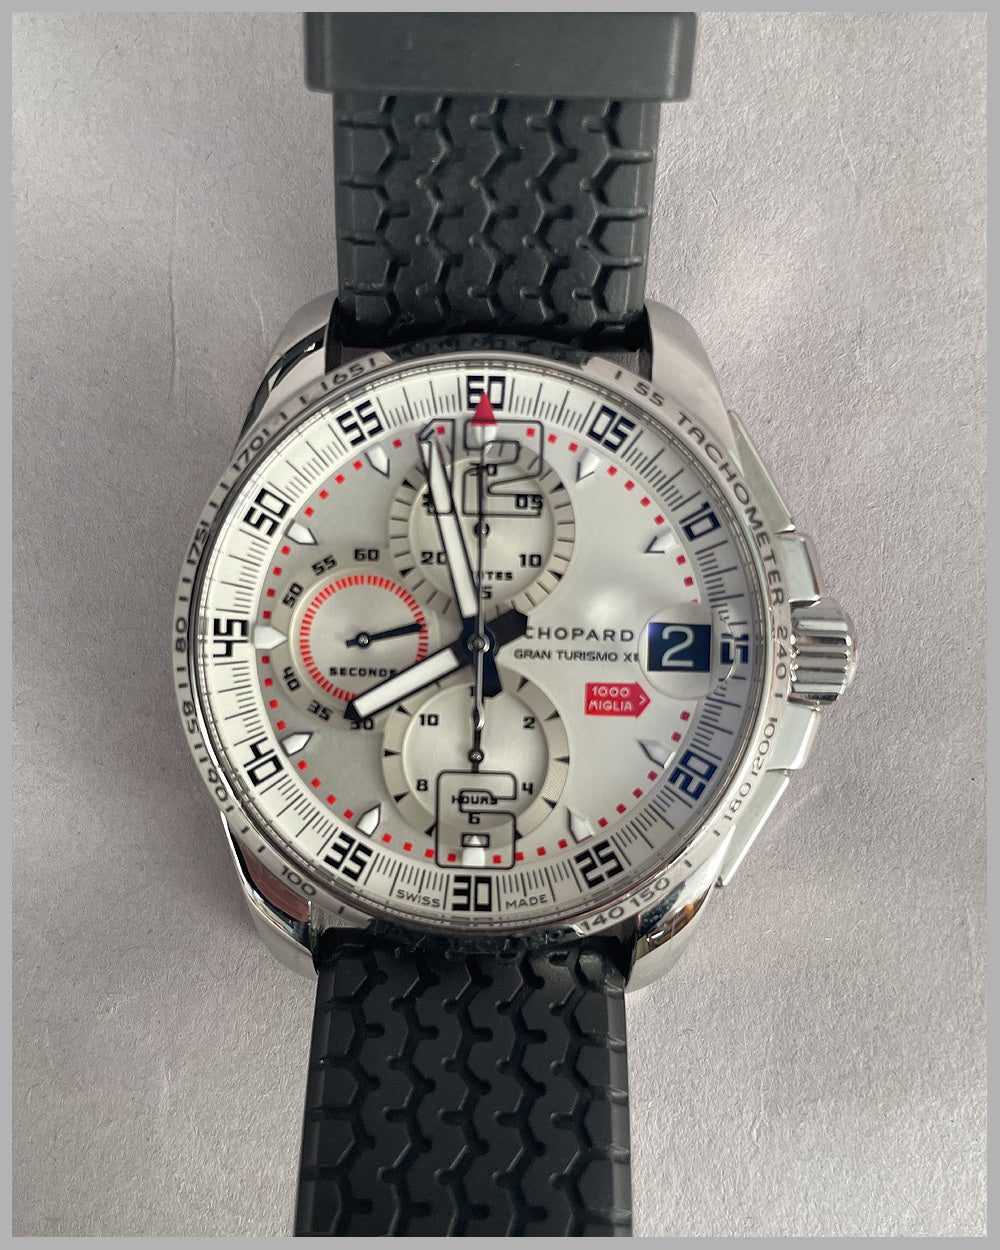 Chopard Mille Miglia Gran Turismo XL chronograph & tire pressure gauge